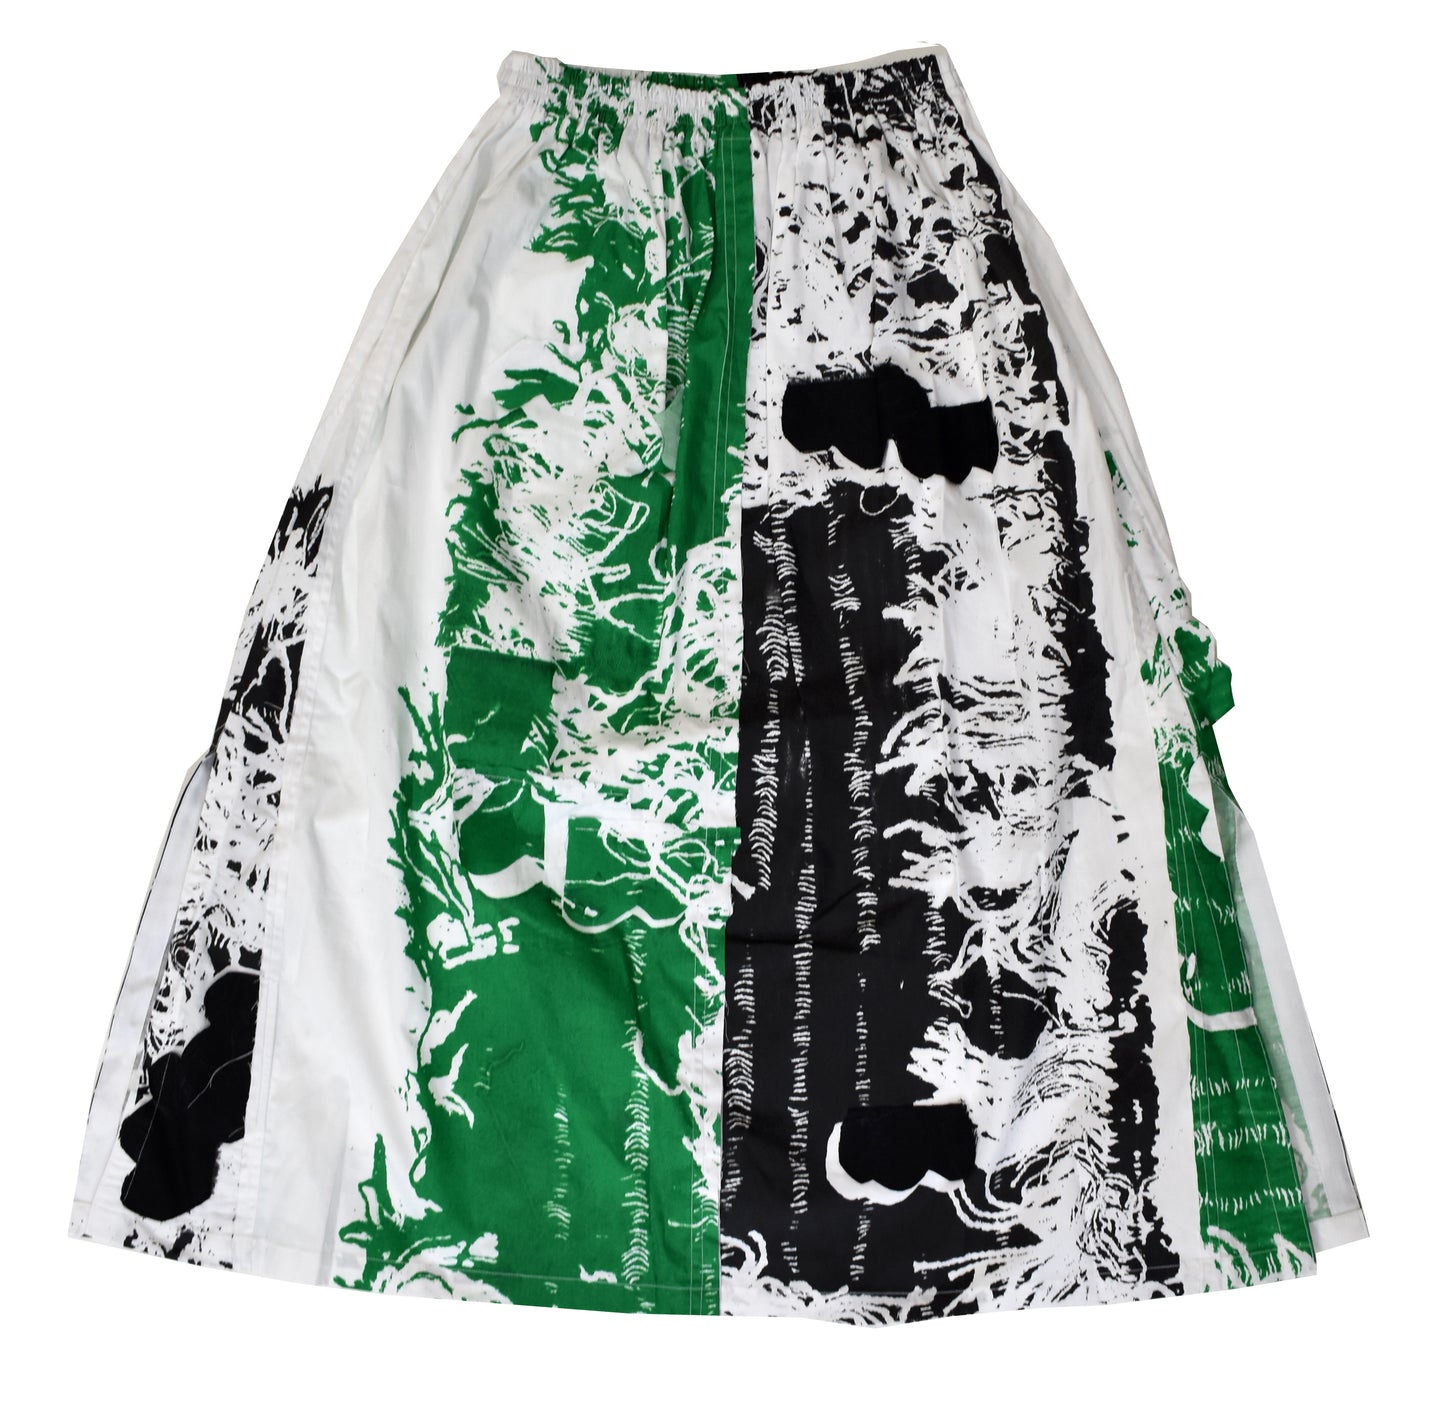 Tangled Yarn Skirt